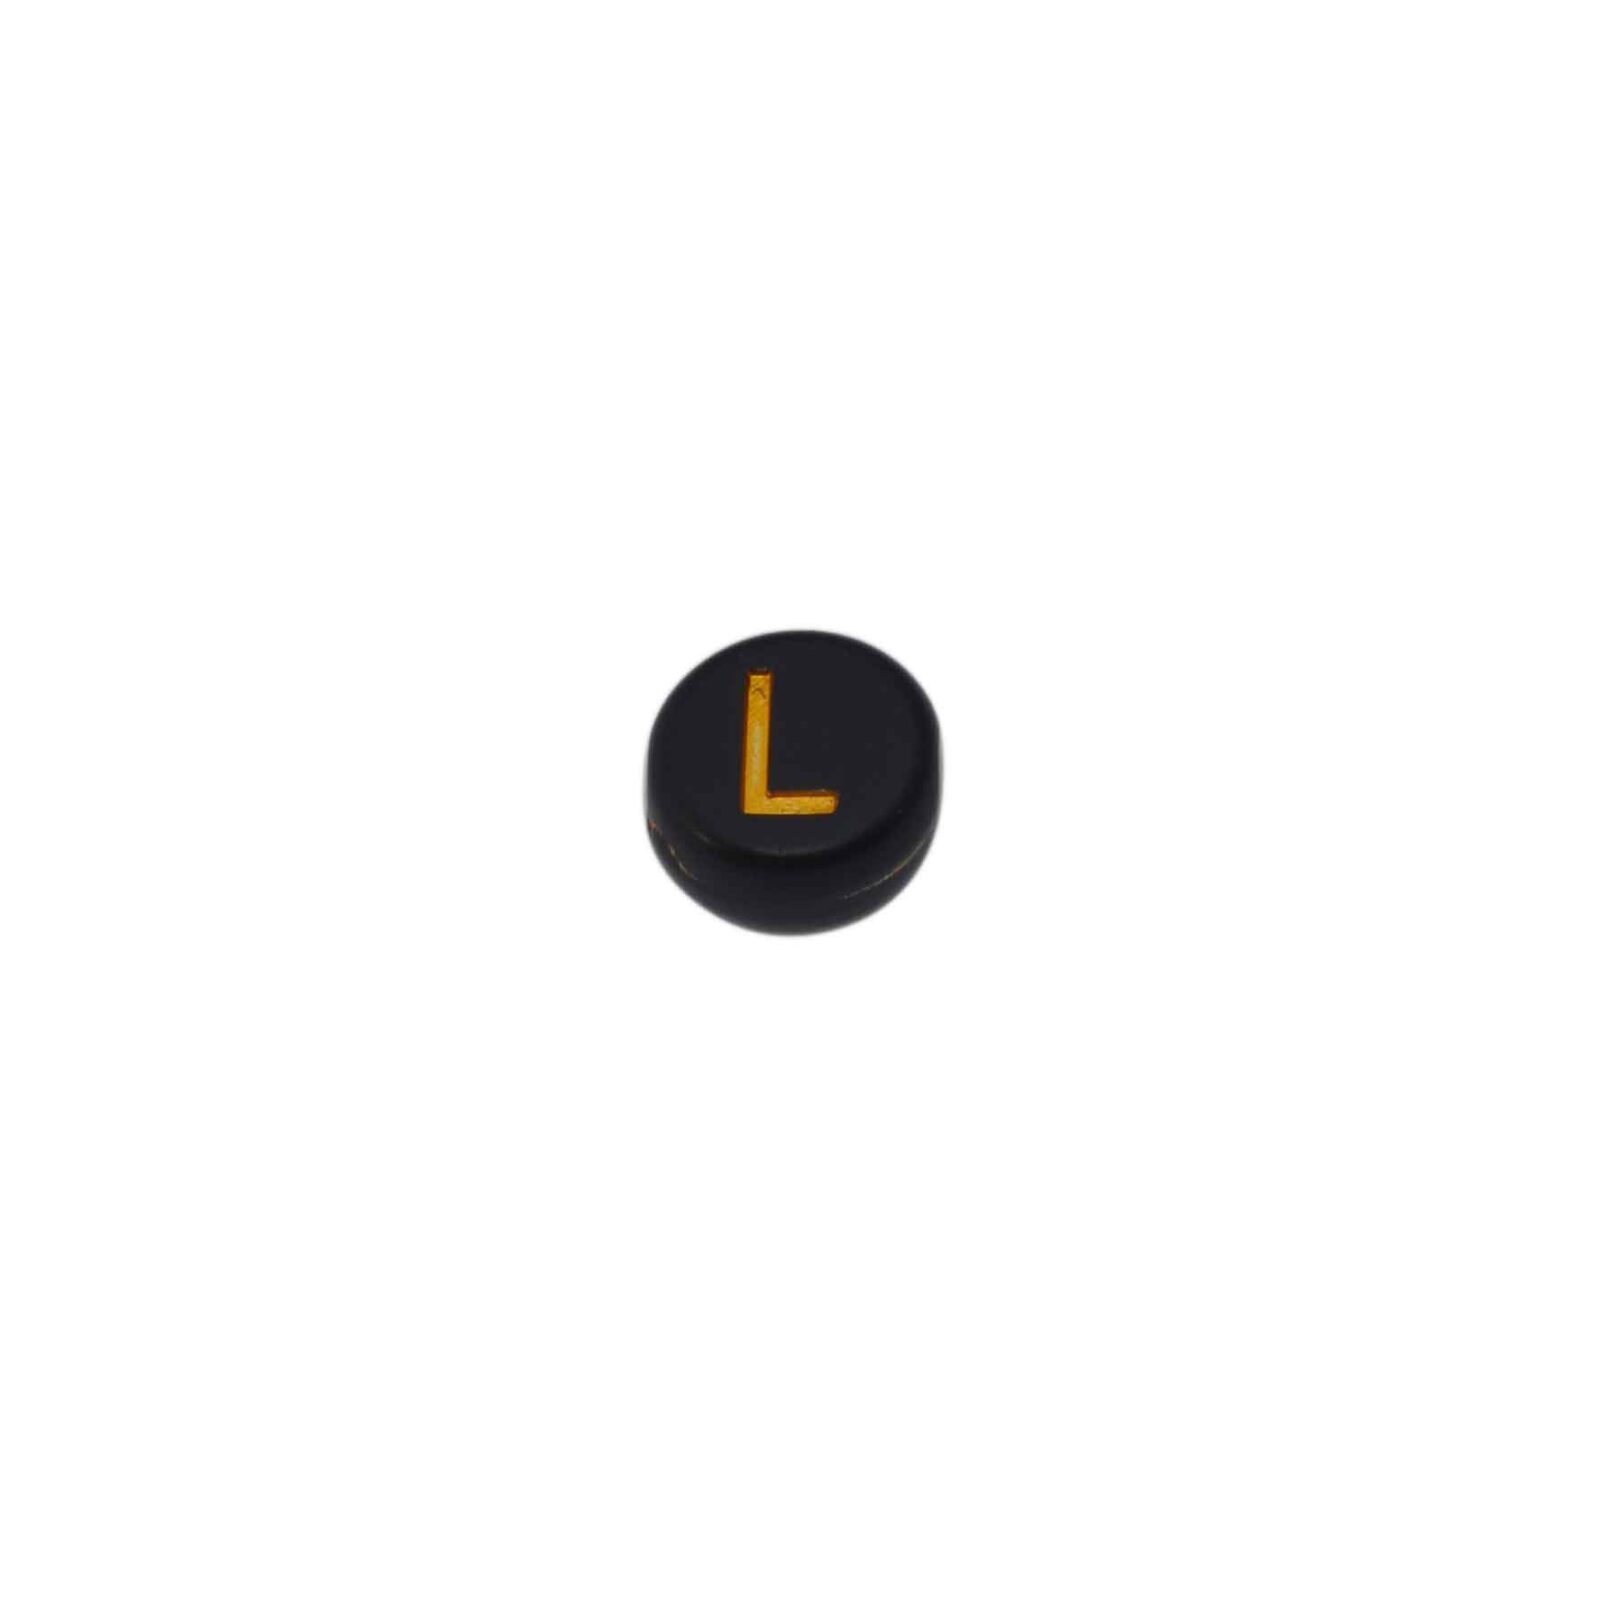 Zwarte ronde letterkraal L